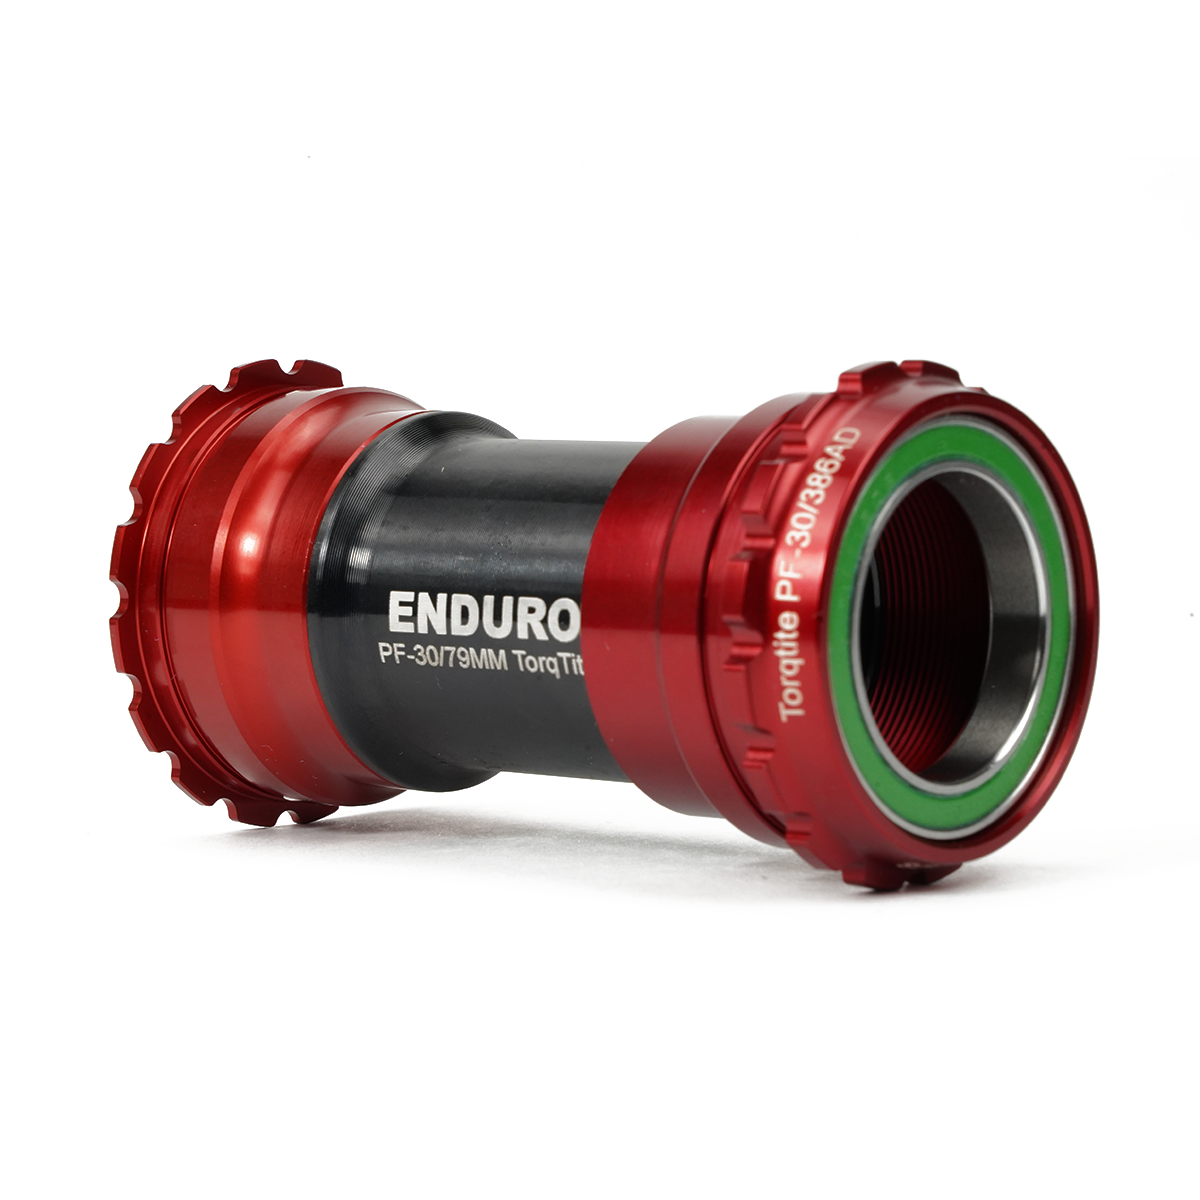 Enduro BKS-0136 - TorqTite, stainless steel, Angular Contact, Bearing Bottom Bracket for BBRight Framesets and SRAM DUB/29mm Cranksets - Red